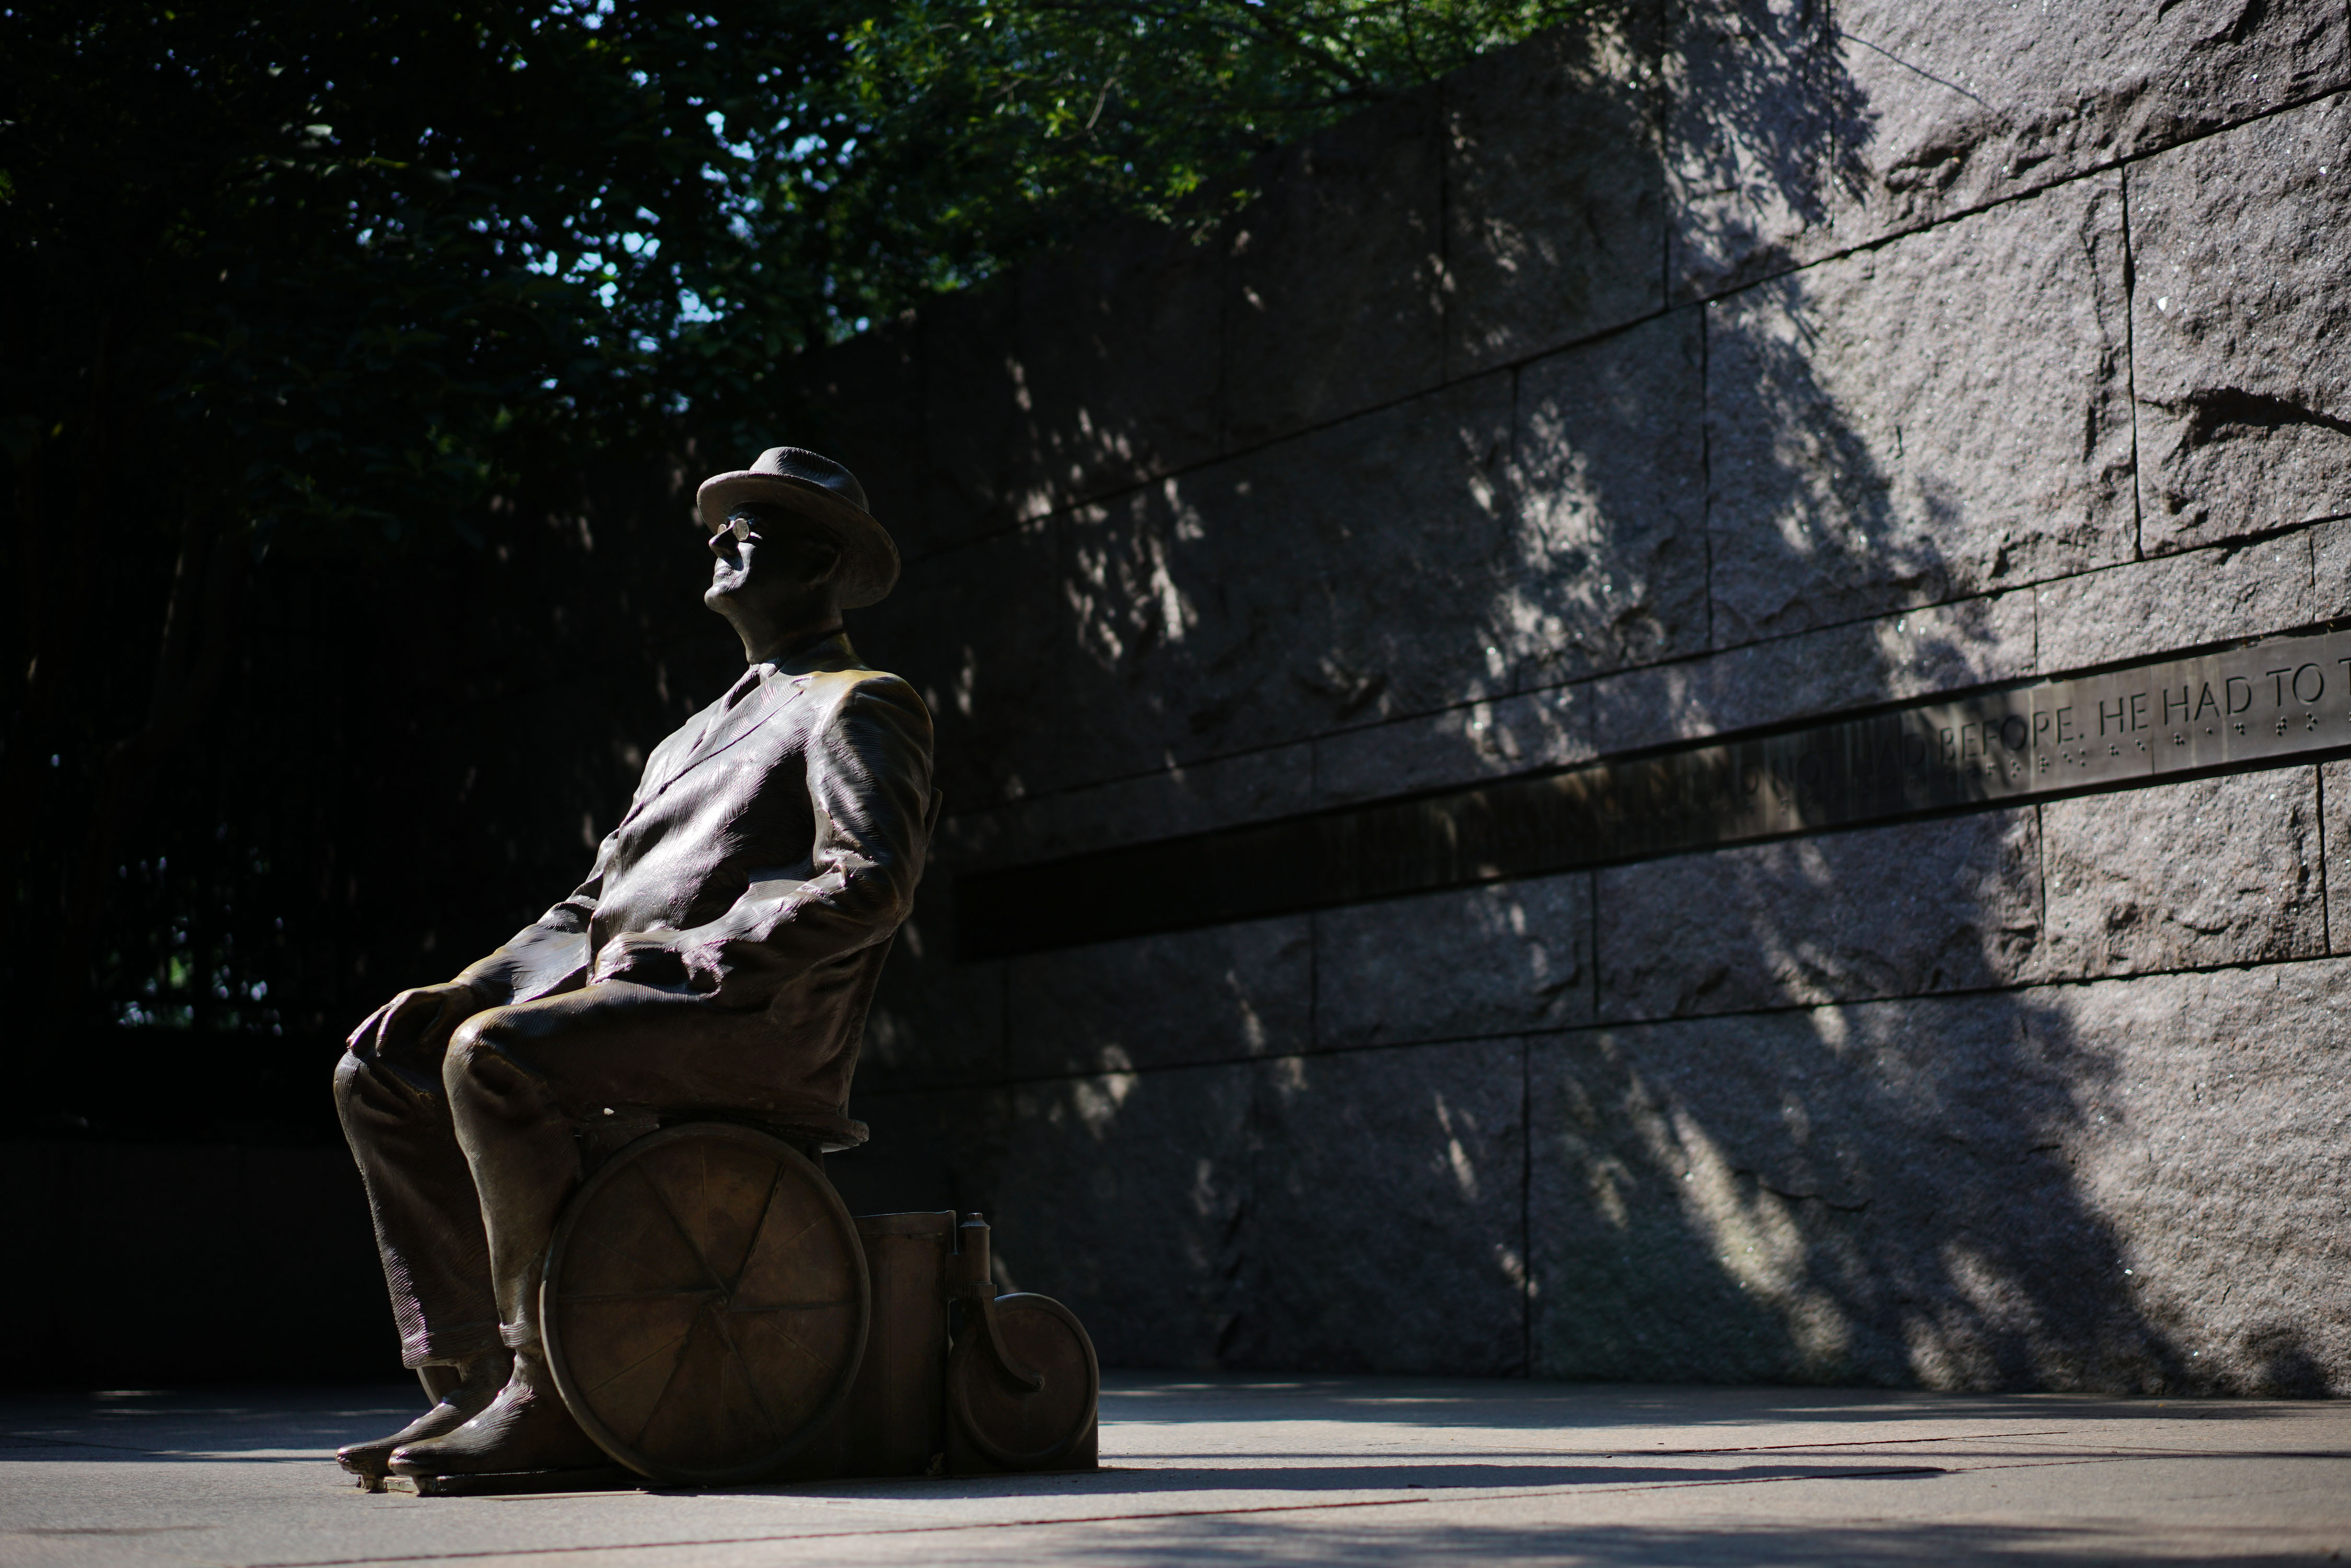 A statue of former US president Franklin Delano Roosevelt is seen at the Franklin Delano Roosevelt Memorial in Washington, D.C. on July 2, 2018. (Mandel Ngan—AFP/Getty Images)